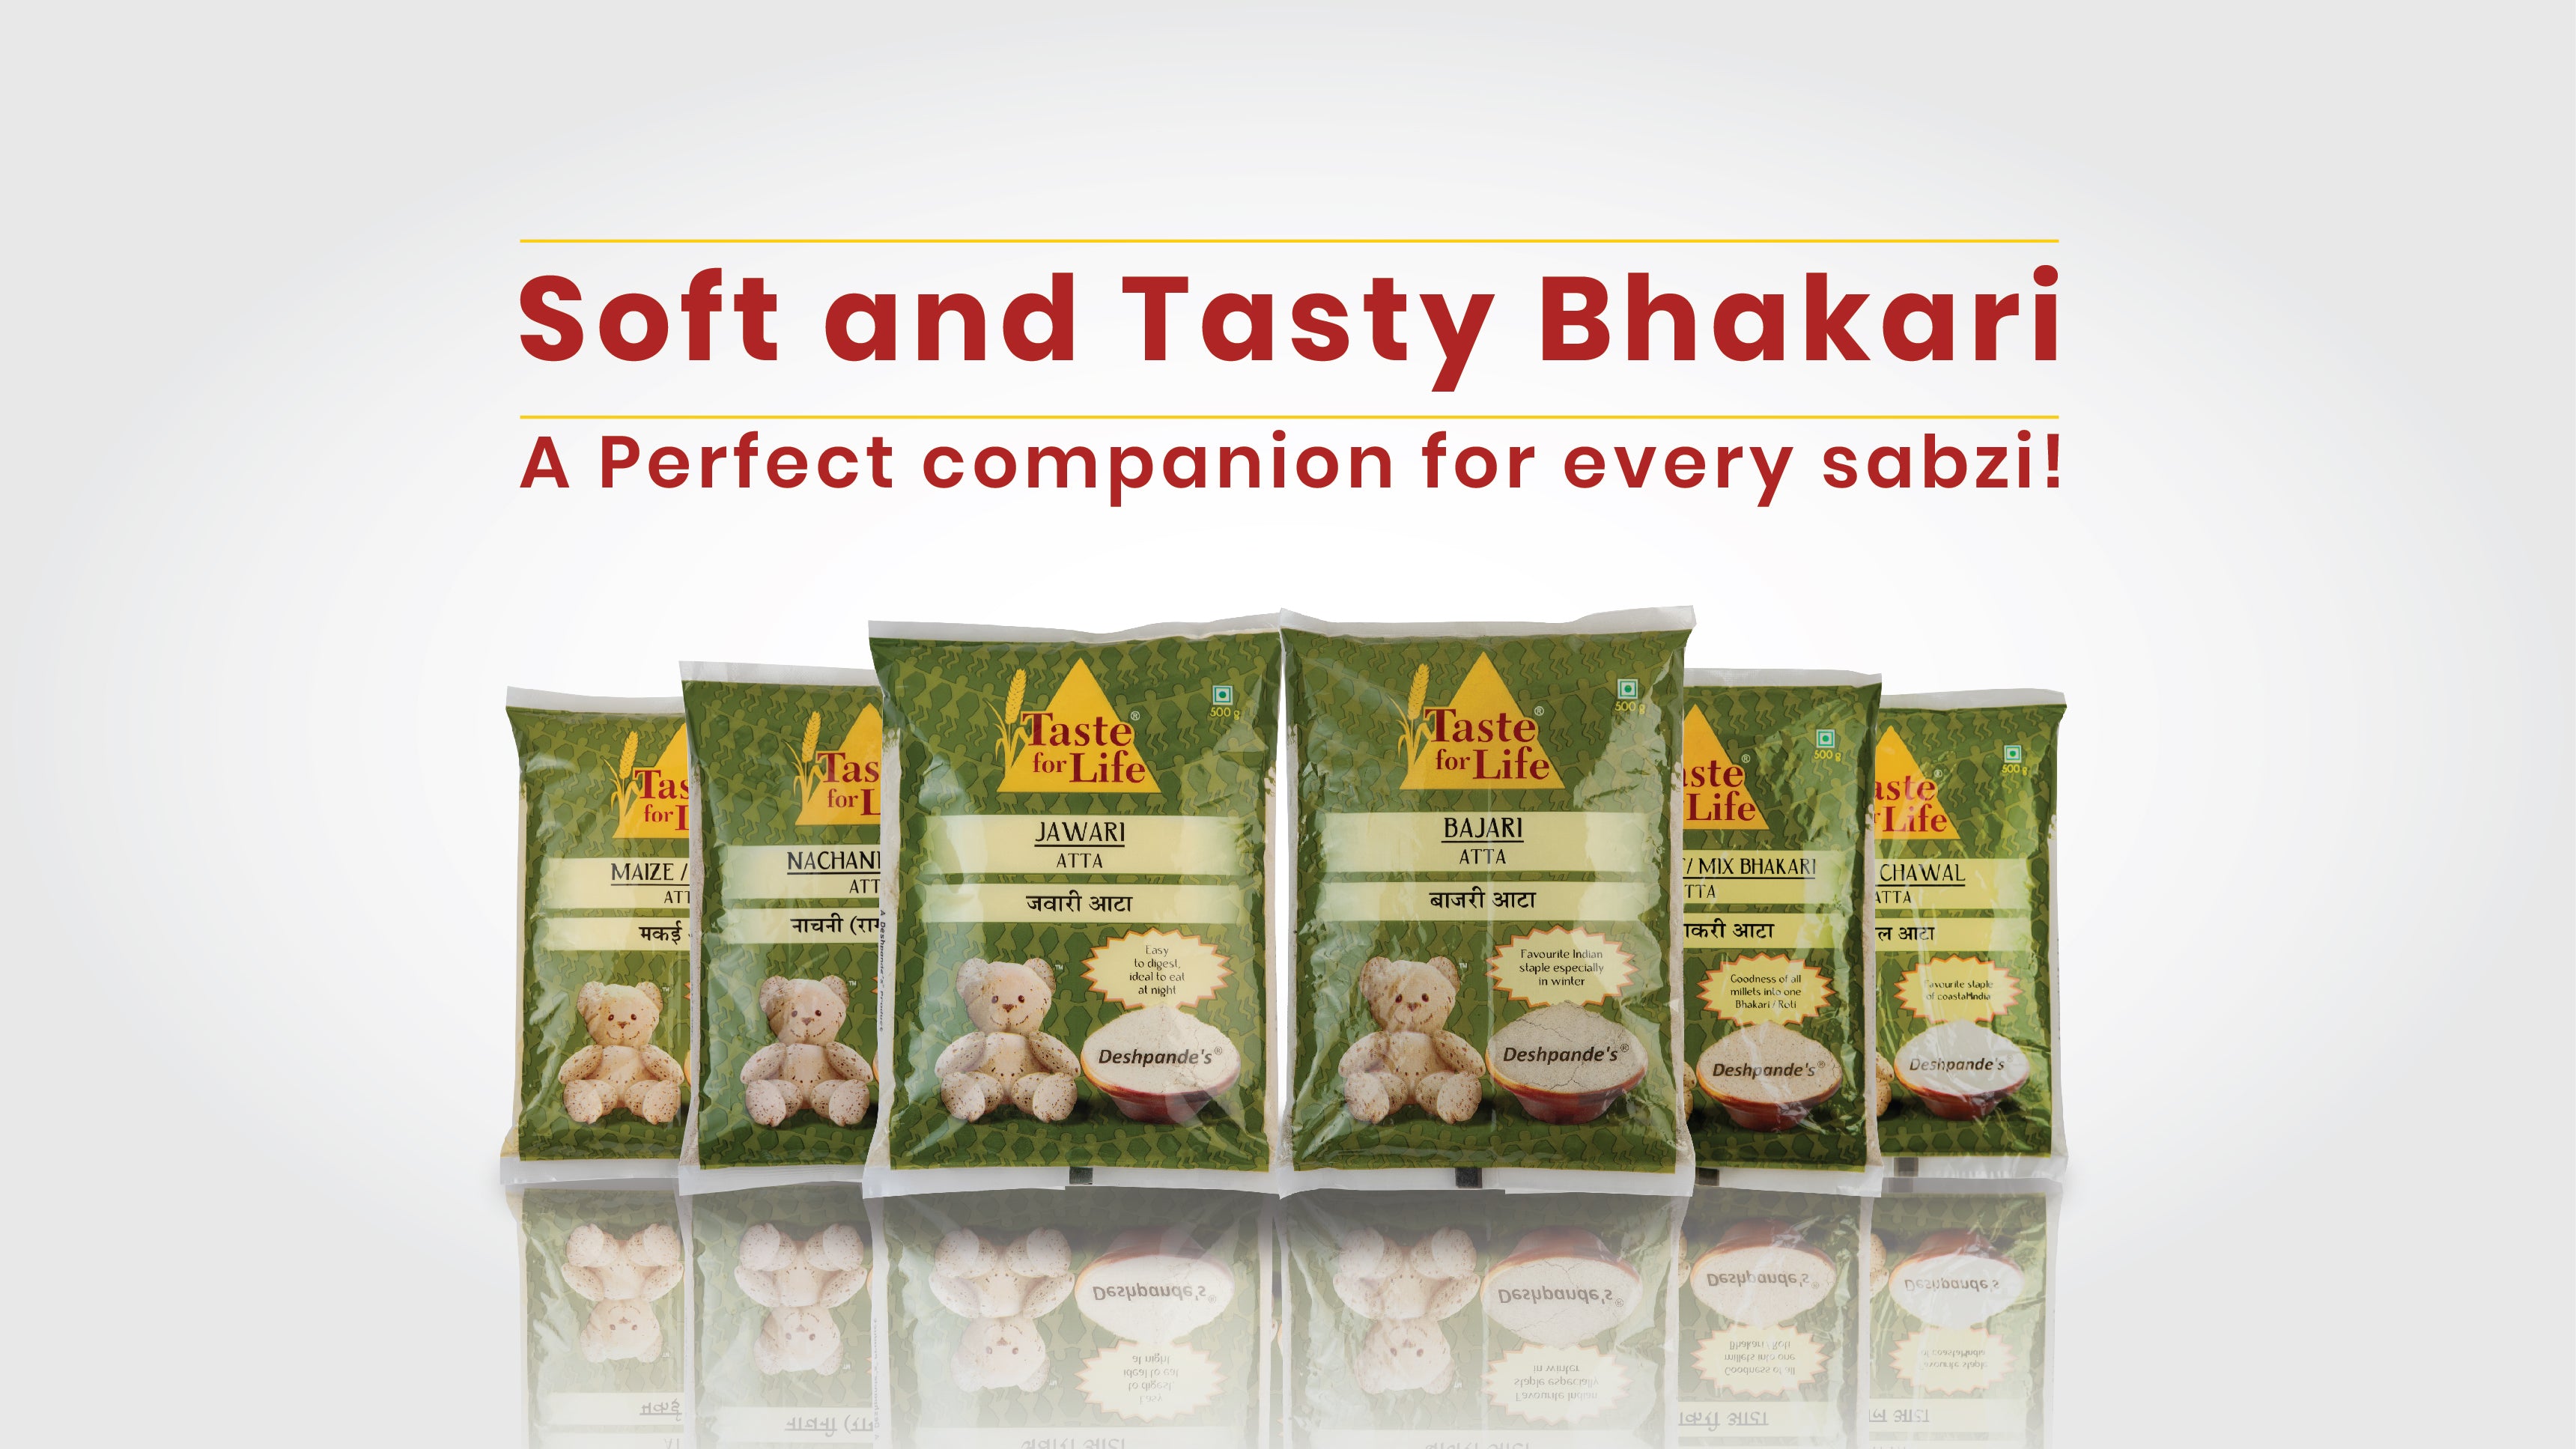 Soft and Tasty Bhakari: A perfect companion for every sabzi!